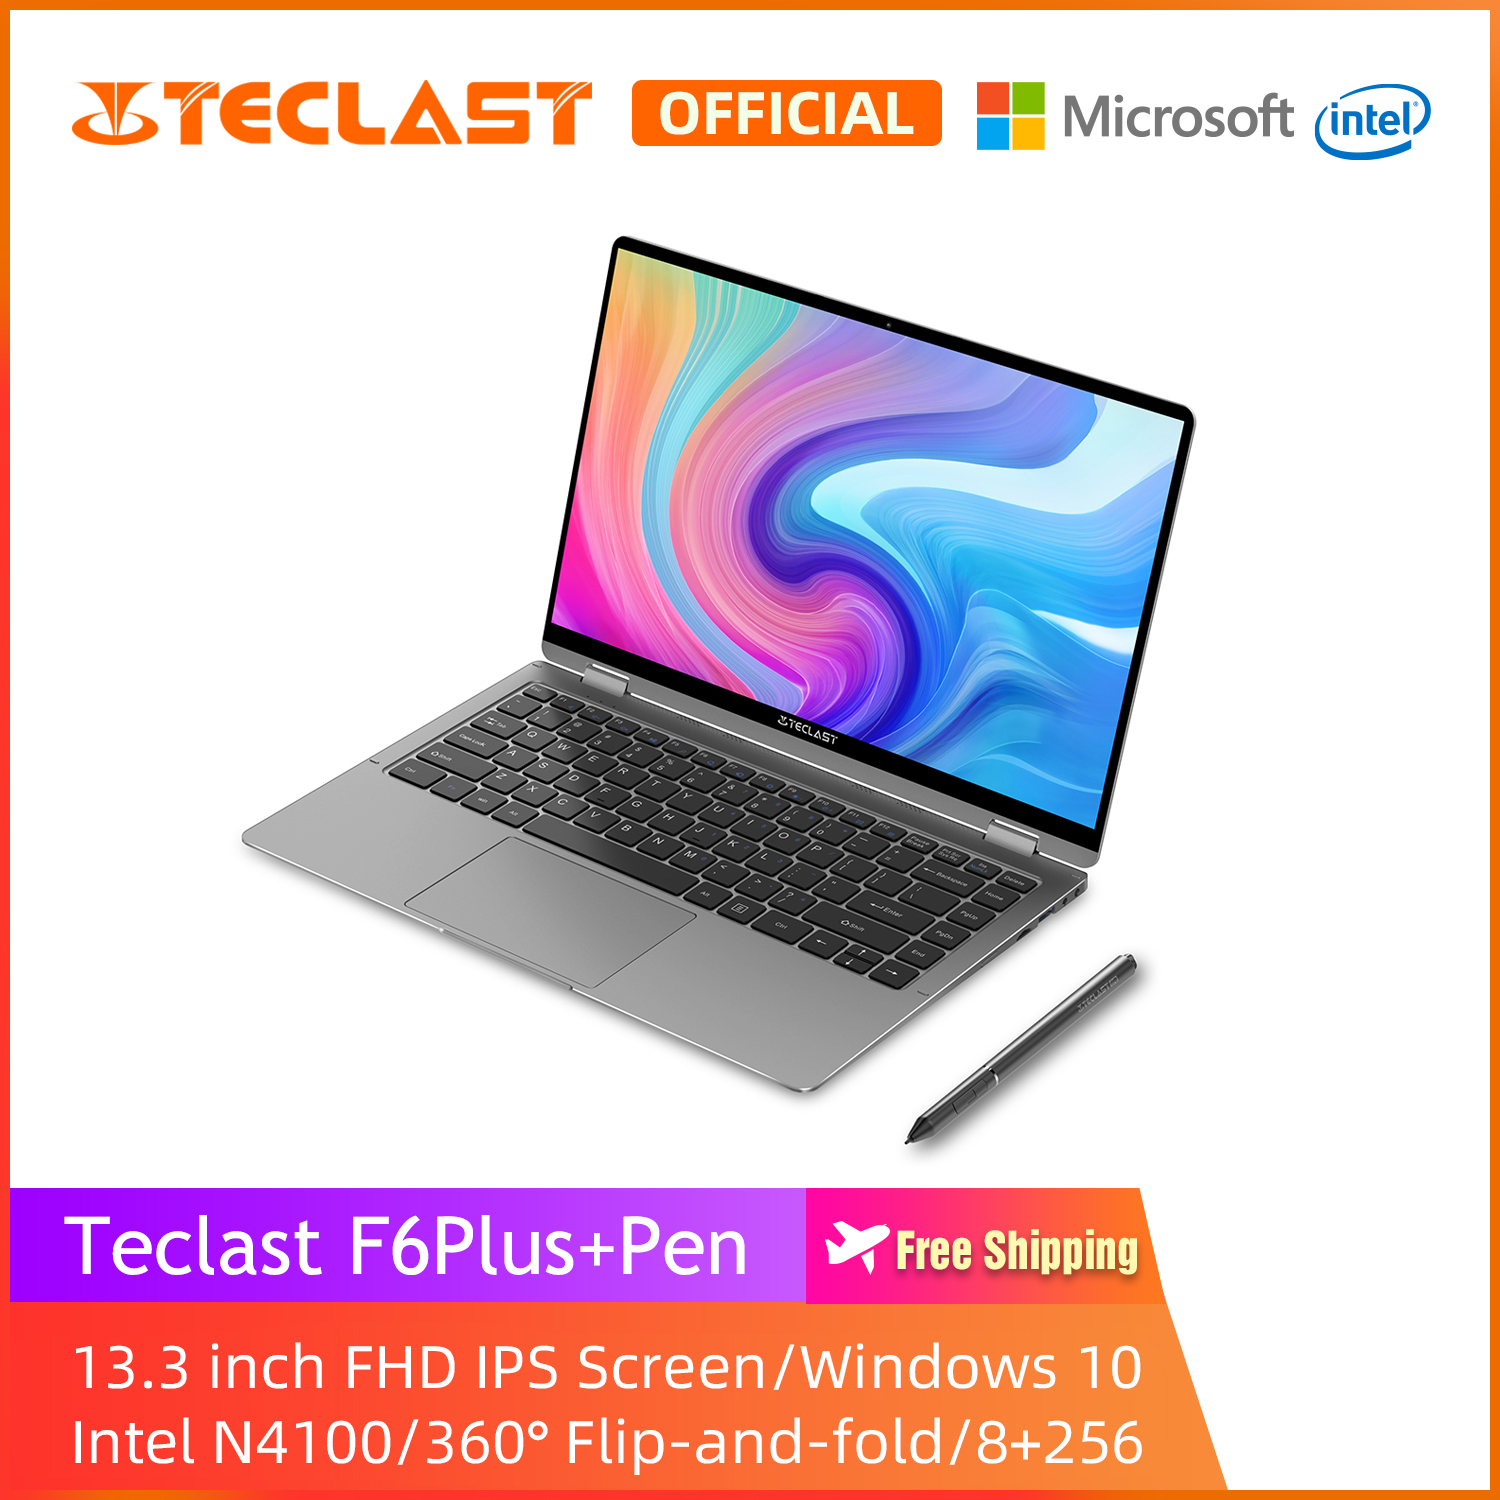 【Teclast Official】F6 Plus Laptop/13.3  inch/ 360° Flip-and-fold Design/FHD IPS Touch Screen/Intel Gemini Lake N4100 CPU/Windows 10/8GB+256GB SSD